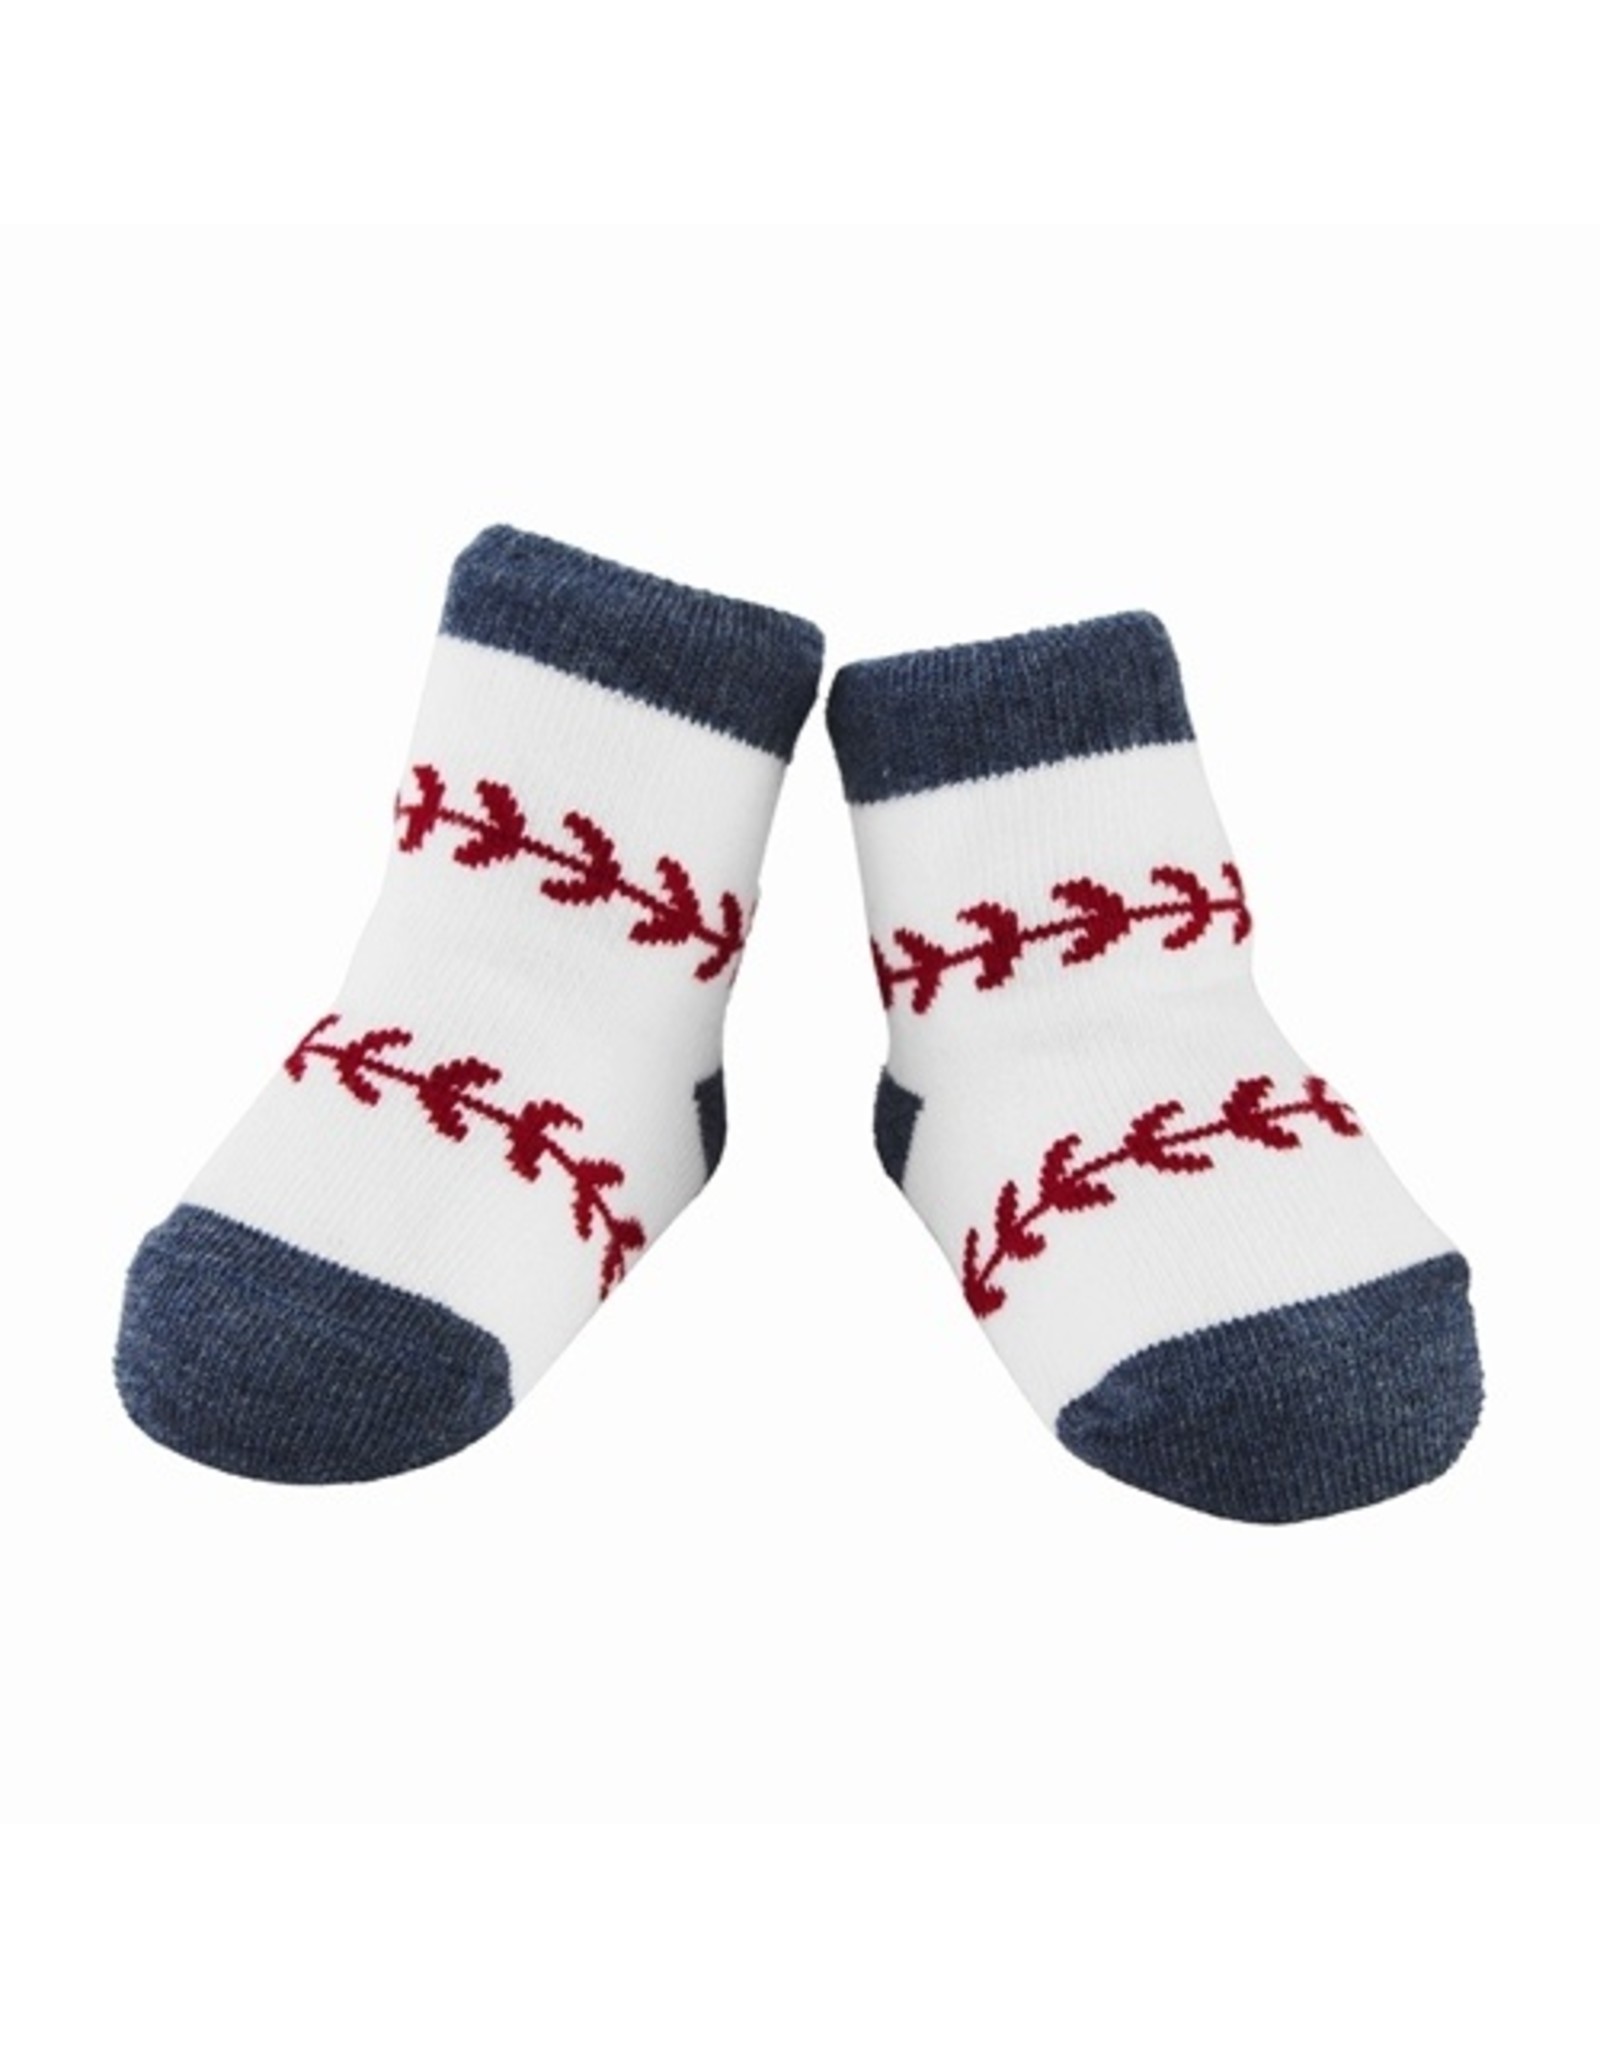 Mudpie Baseball Socks